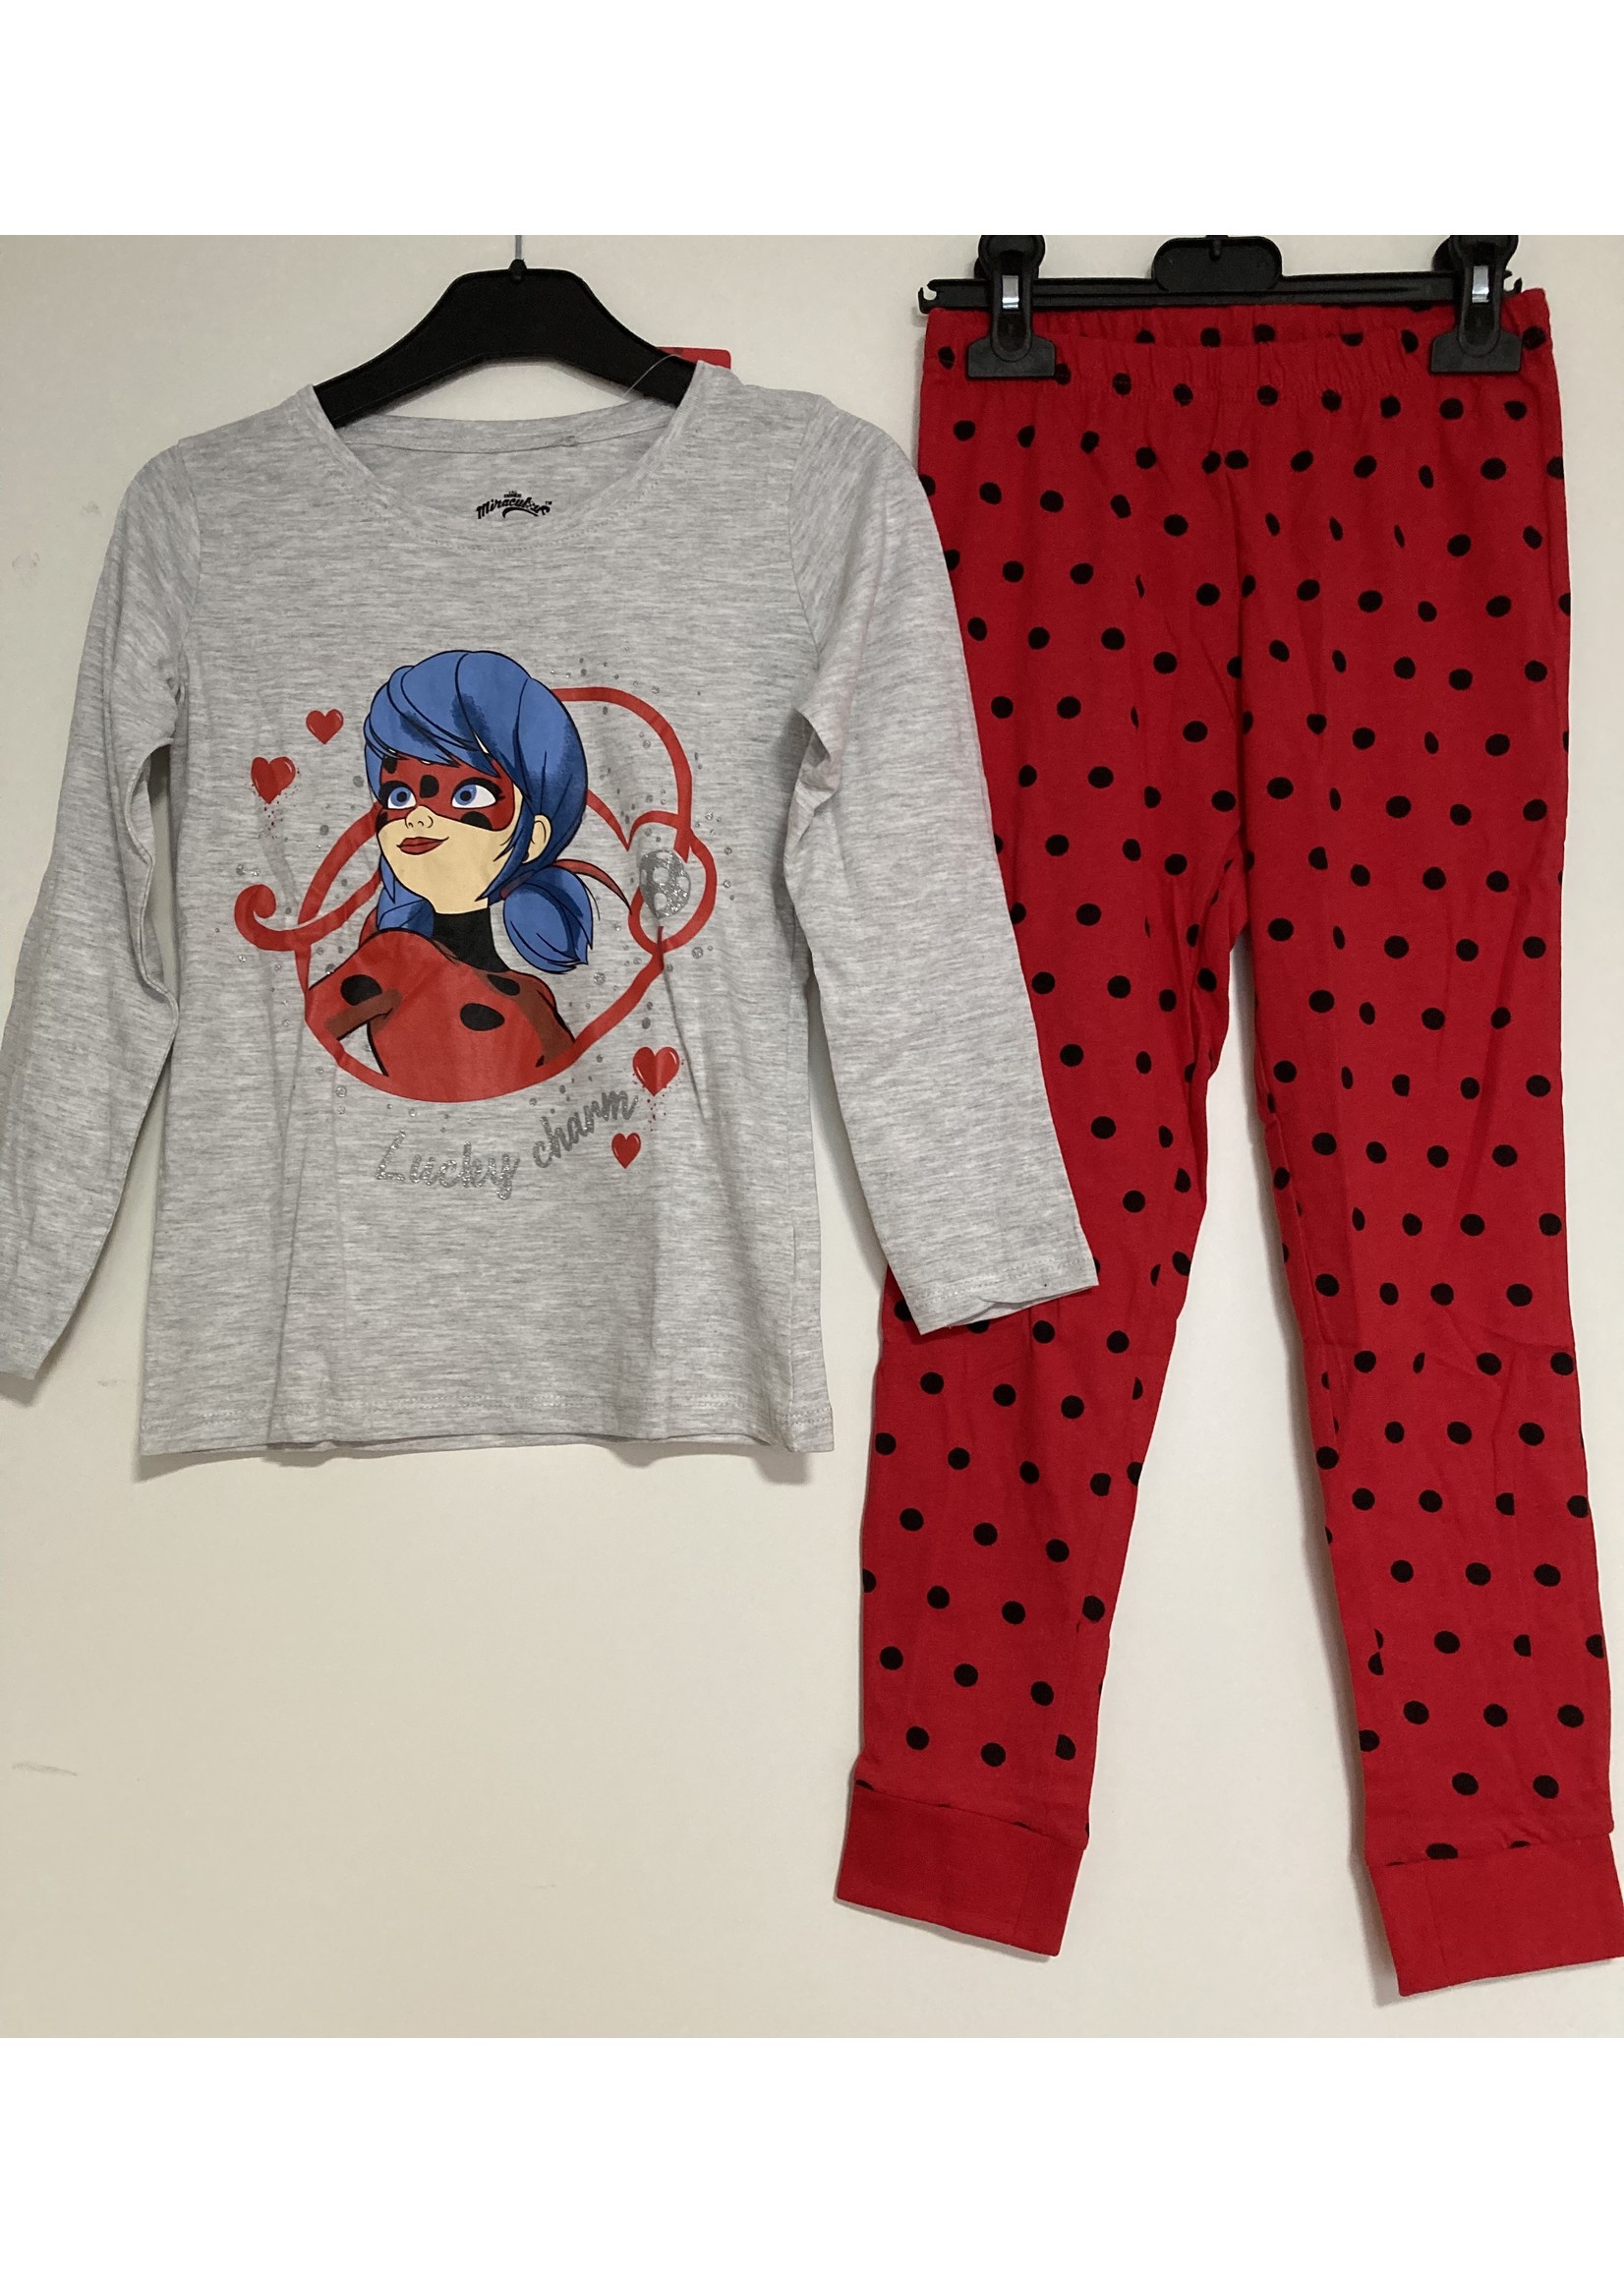 Miraculous Ladybug Pajamas from Miraculous grey-red